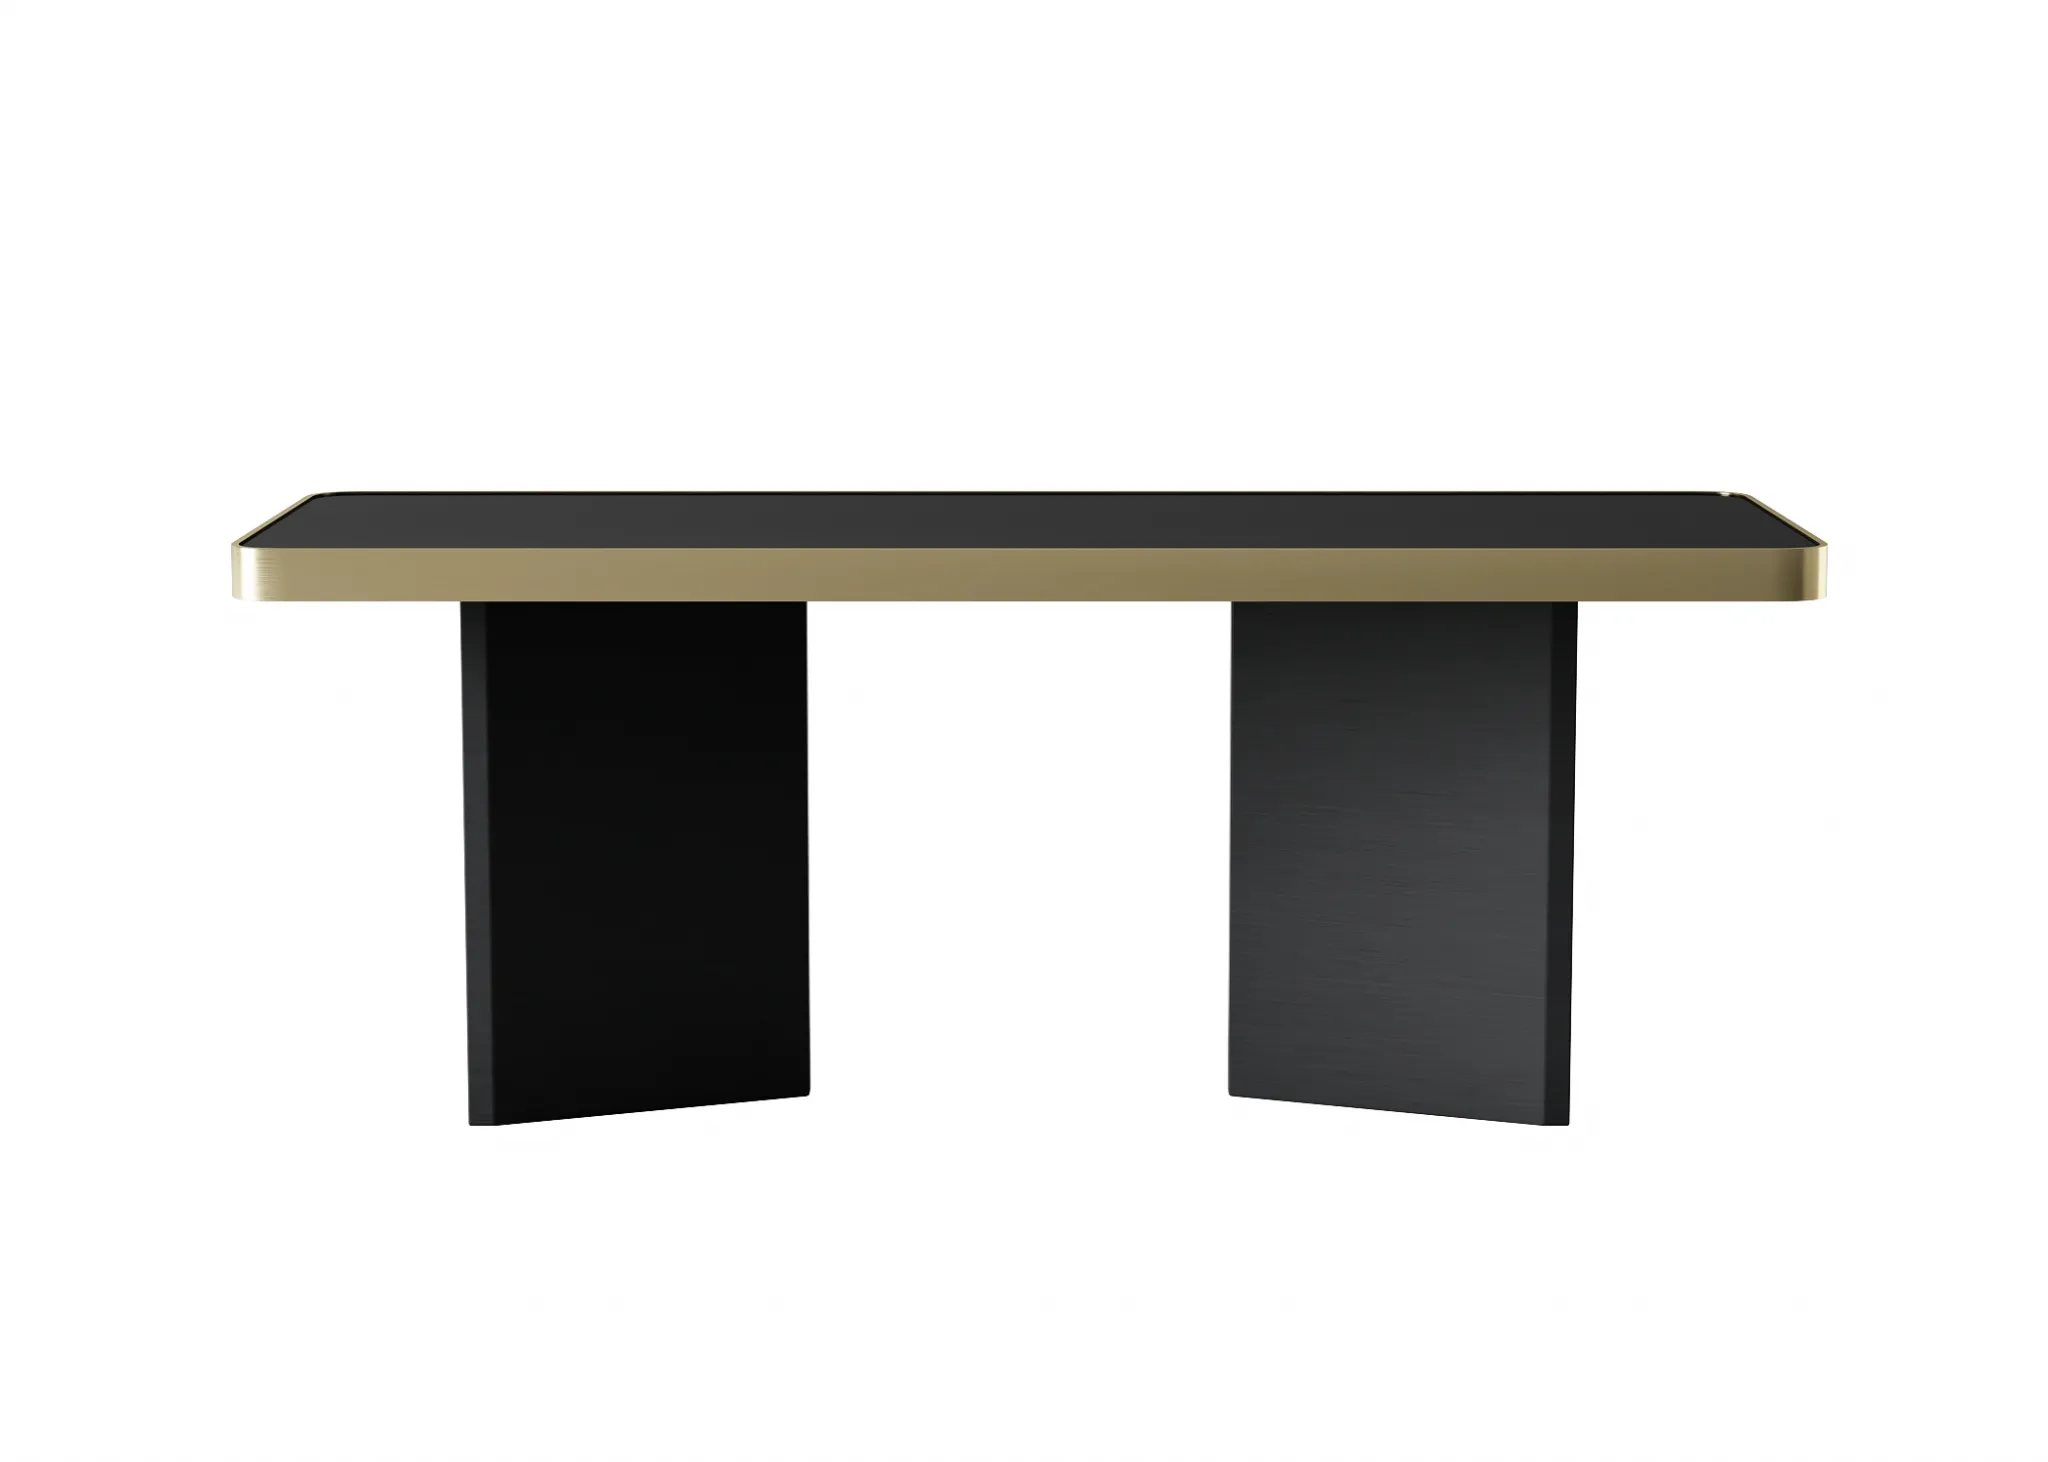 FURNITURE 3D MODELS – TABLES – 0170